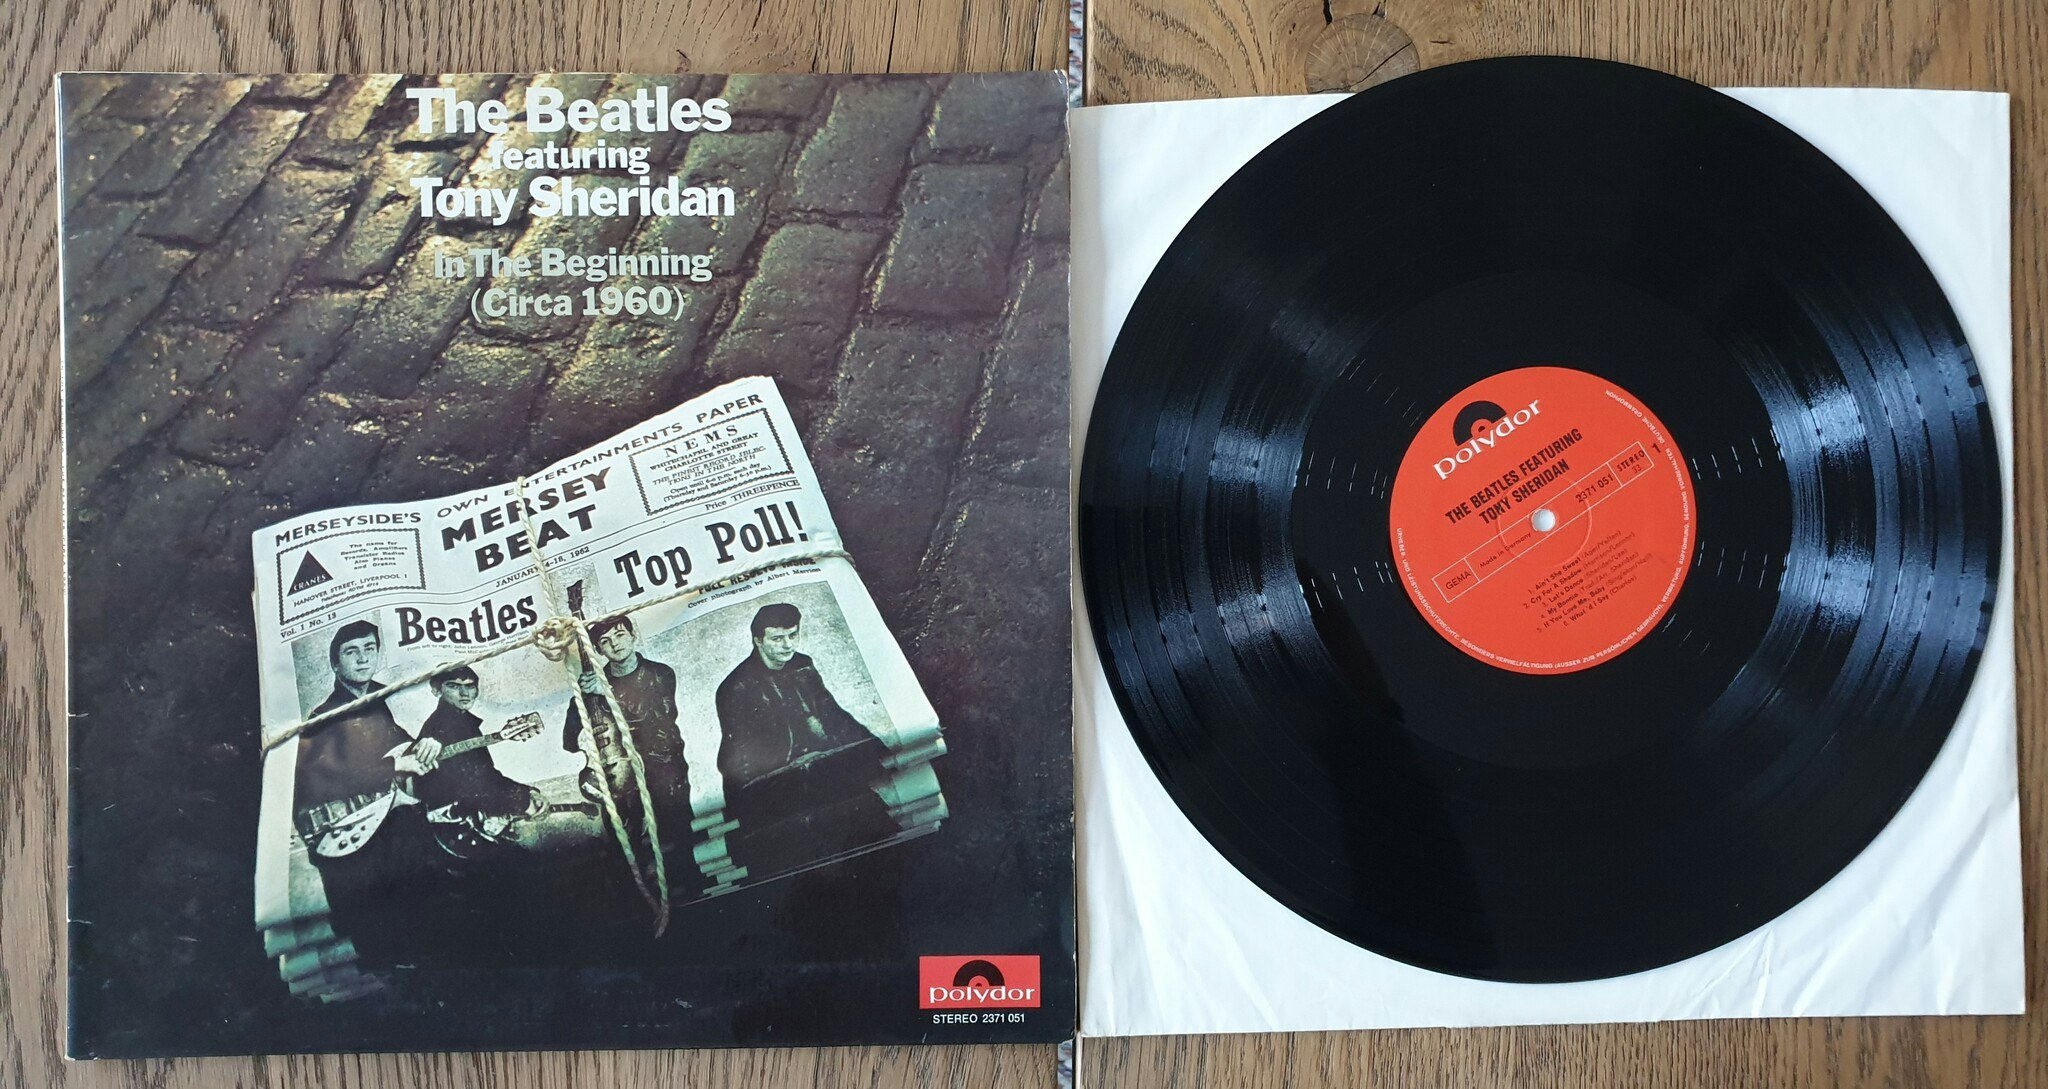 The Beatles featuring Tony Sheridan, In the beginning. Vinyl LP